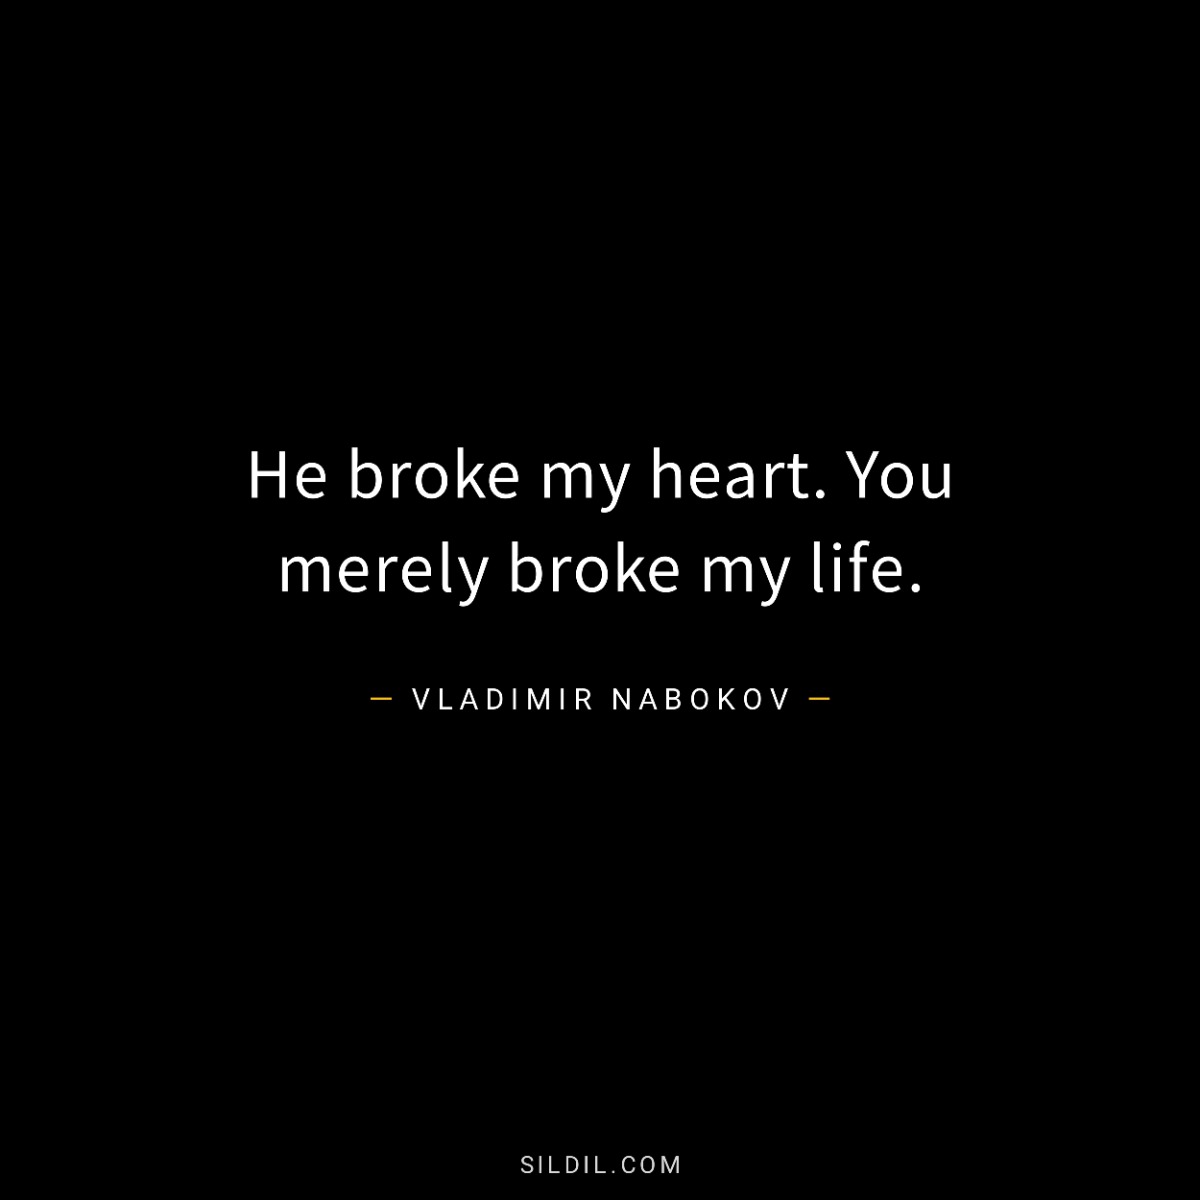 He broke my heart. You merely broke my life.